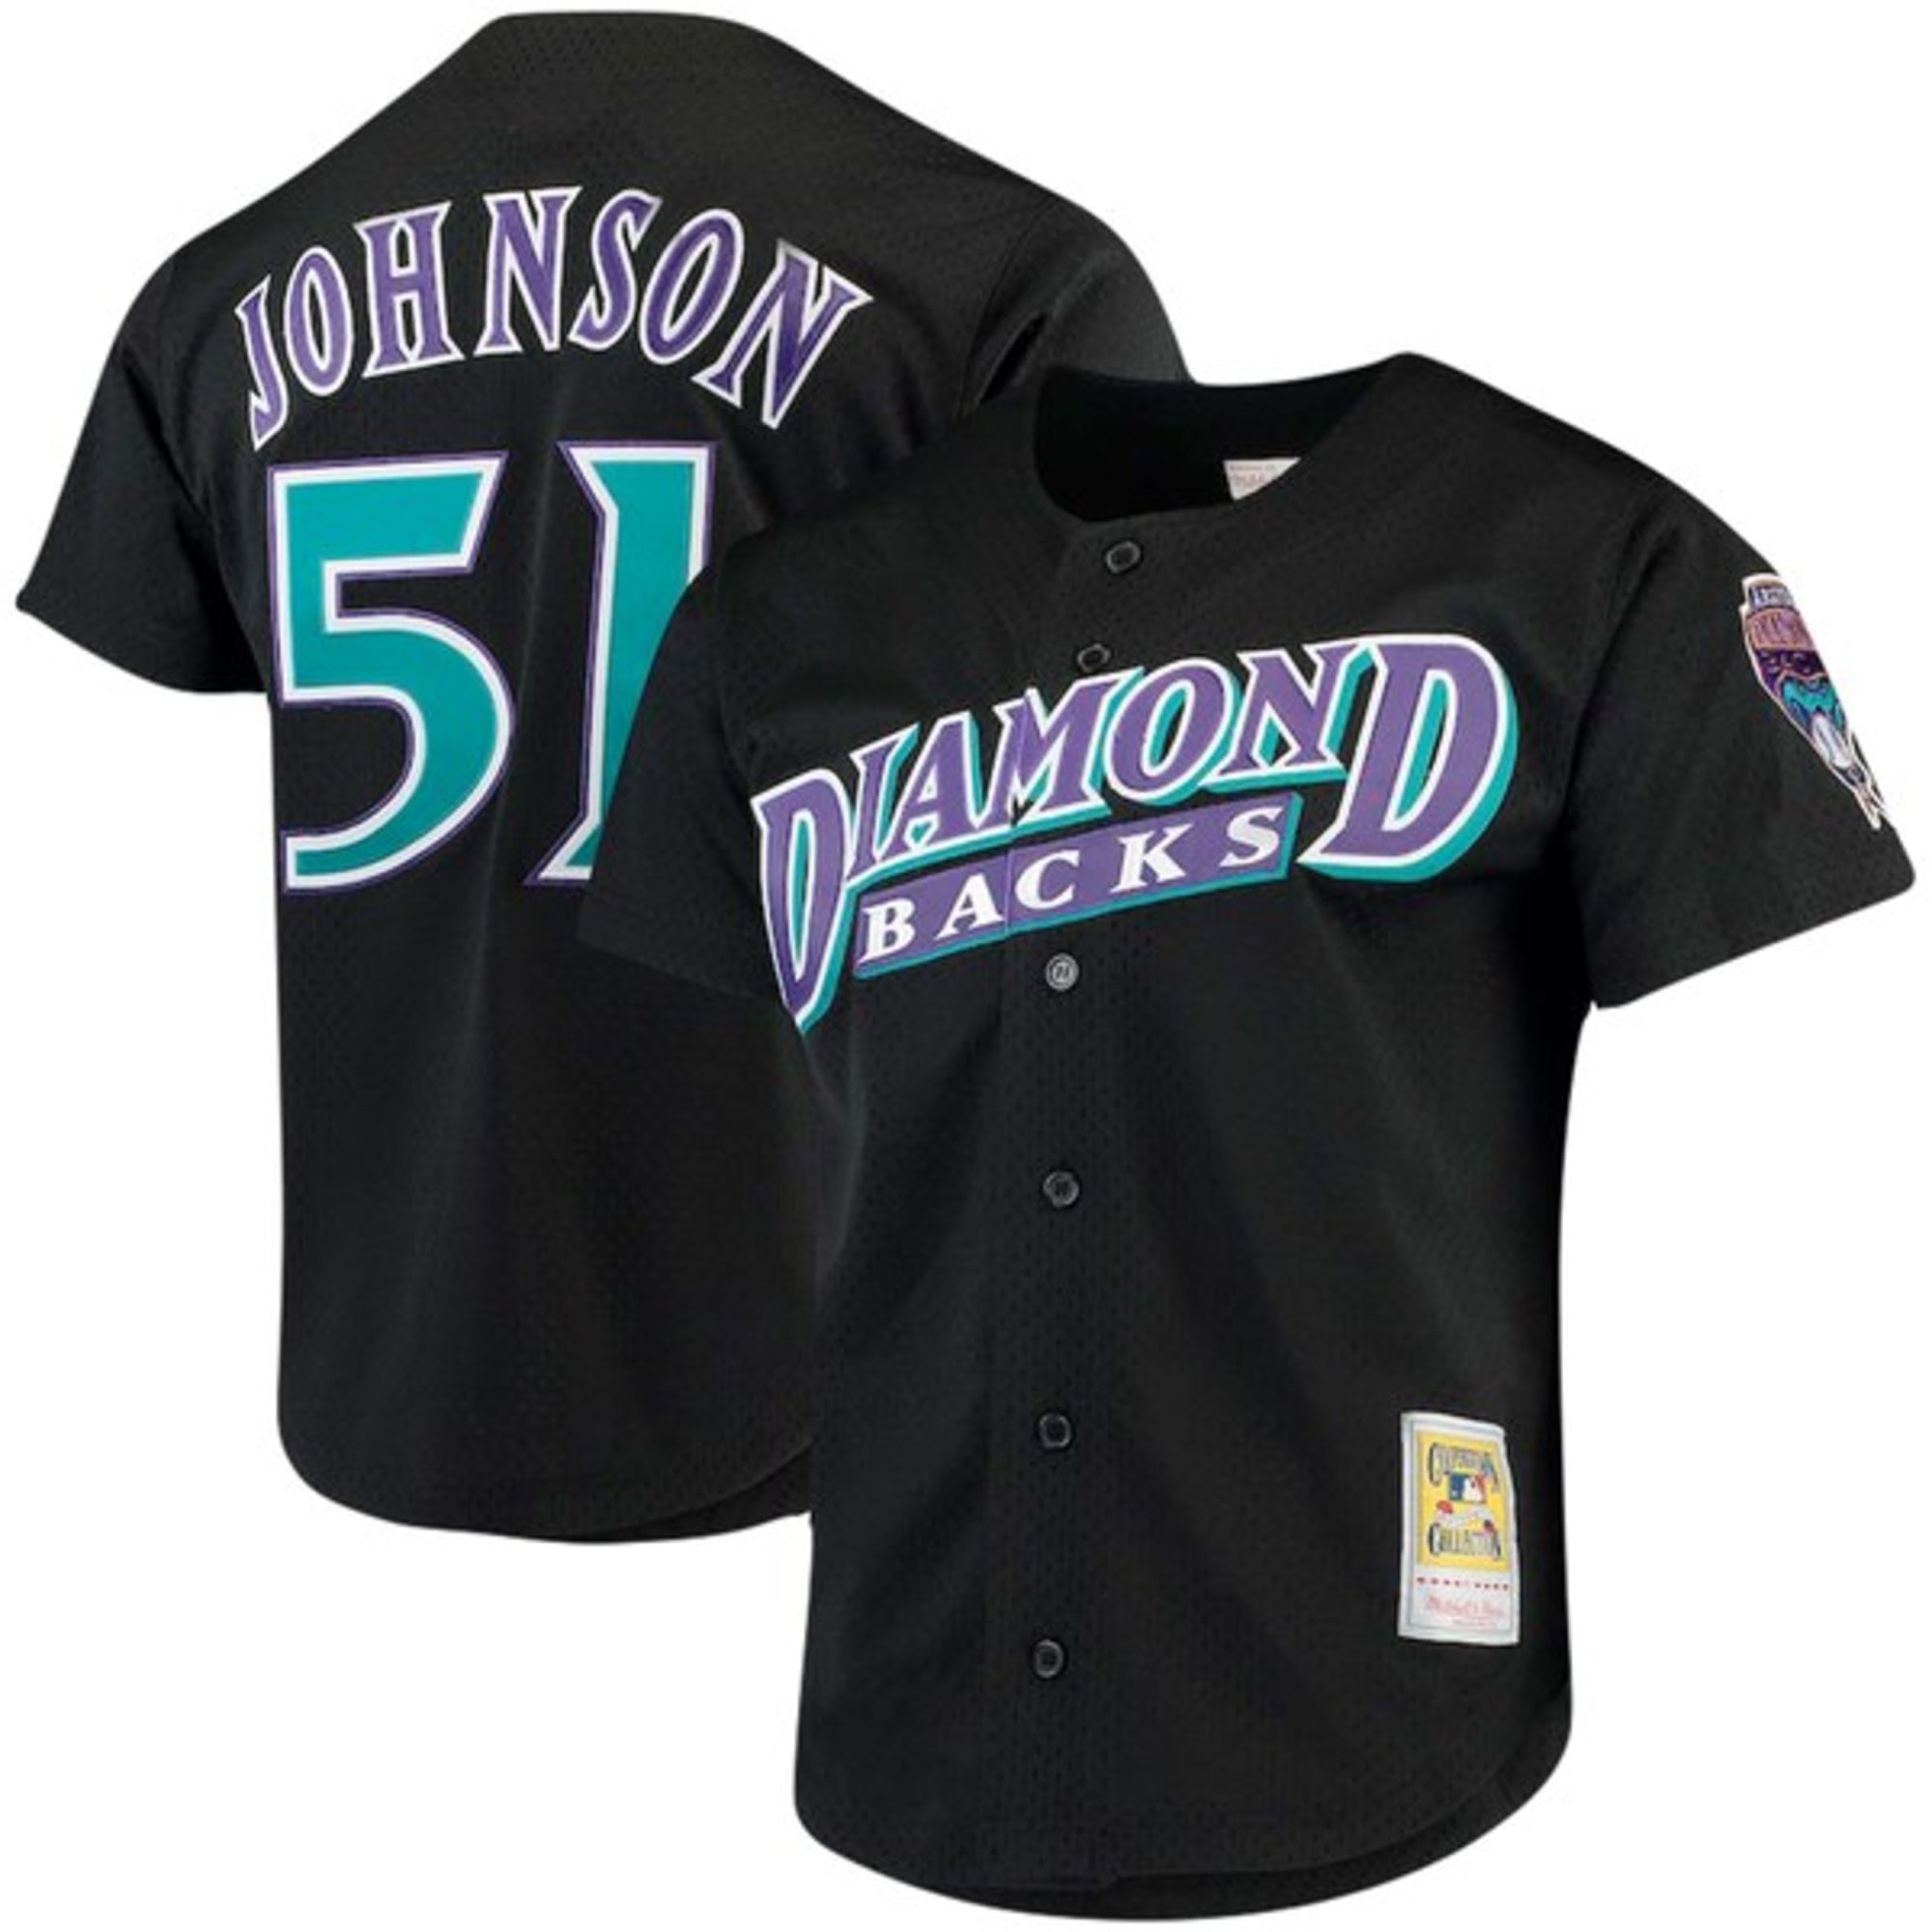 arizona diamondbacks jersey 2019